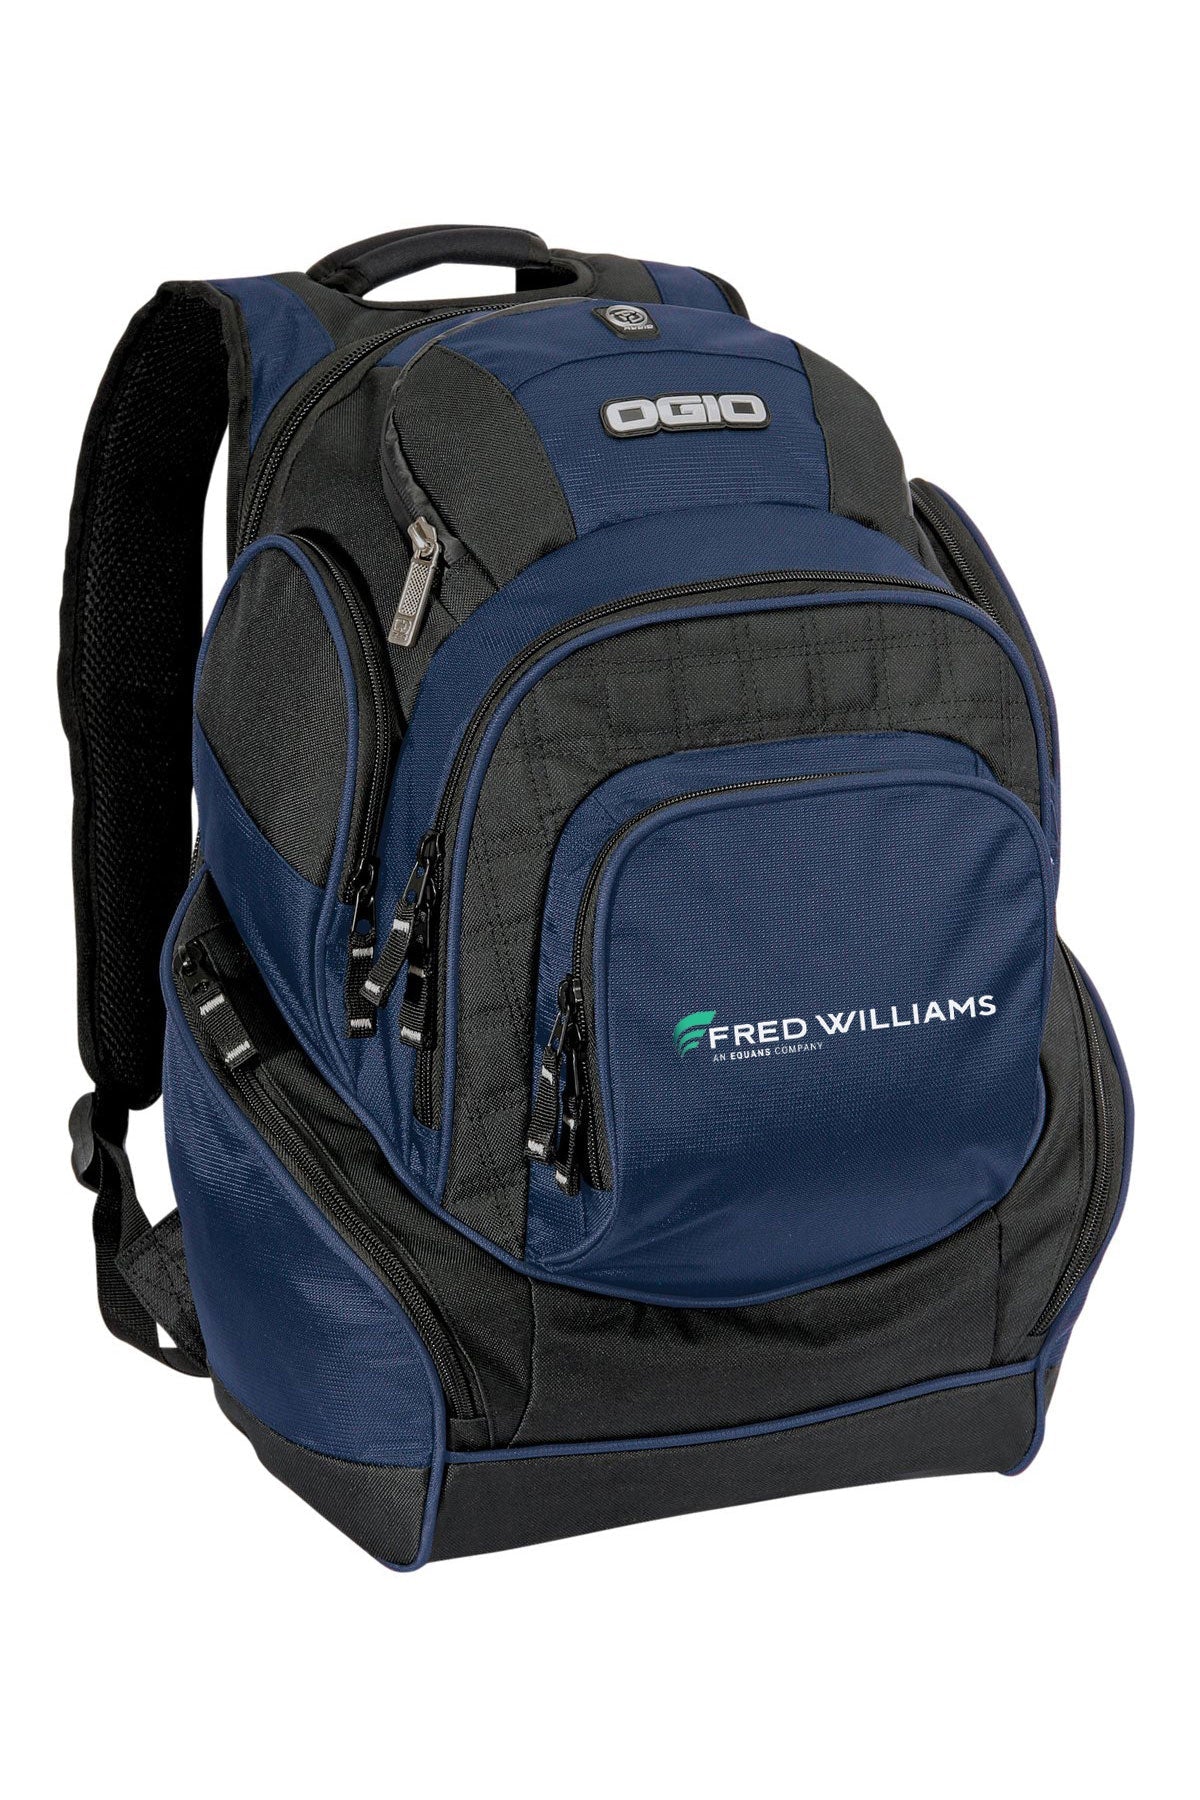 OGIO Mastermind Customzied Backpacks, Navy [Fred Williams]